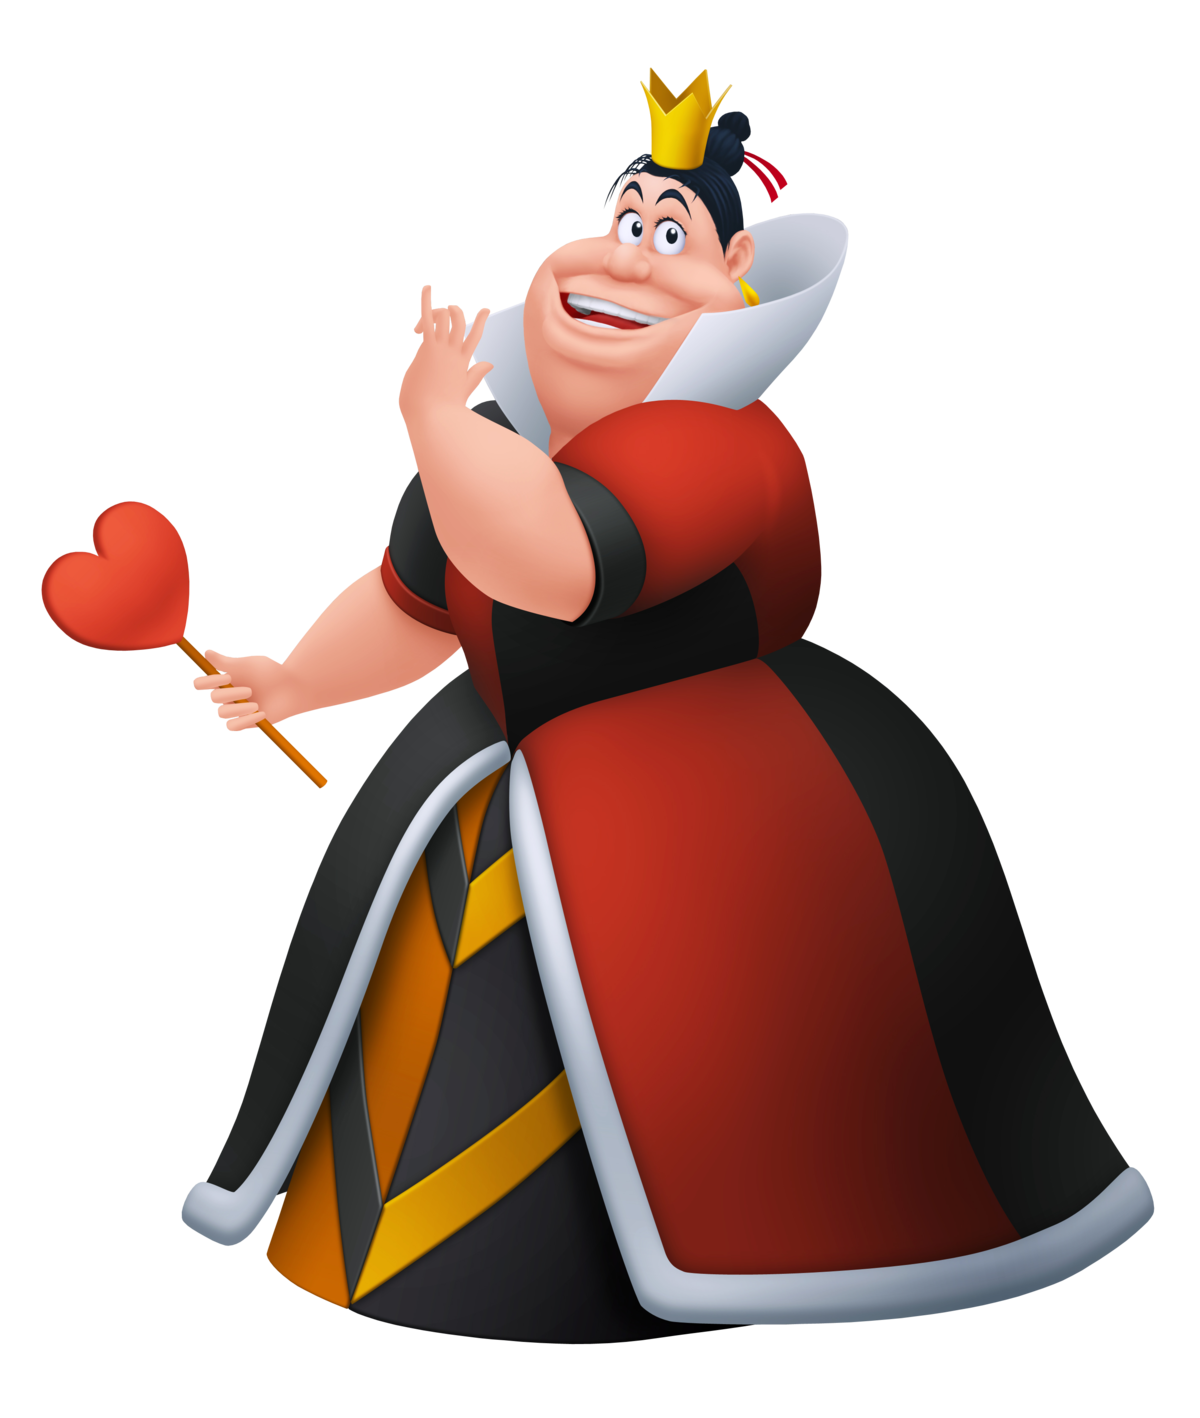 Queen of Hearts - Kingdom Hearts Wiki, the Kingdom Hearts encyclopedia